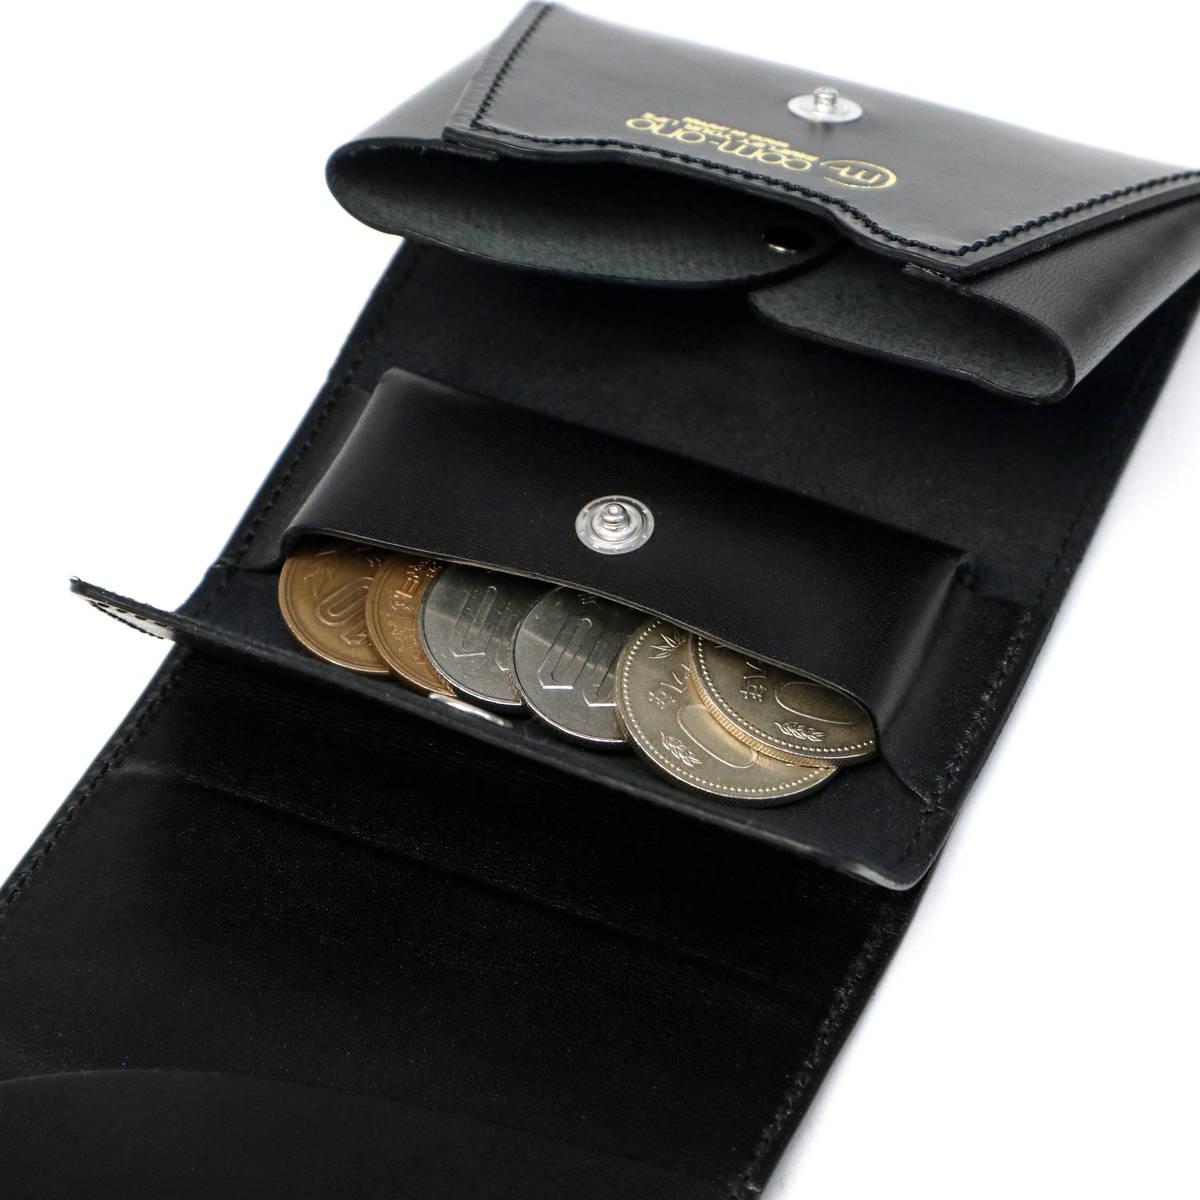 com-ono コモノ Slim Series smart fold wallet 二つ折り財布 SLIM